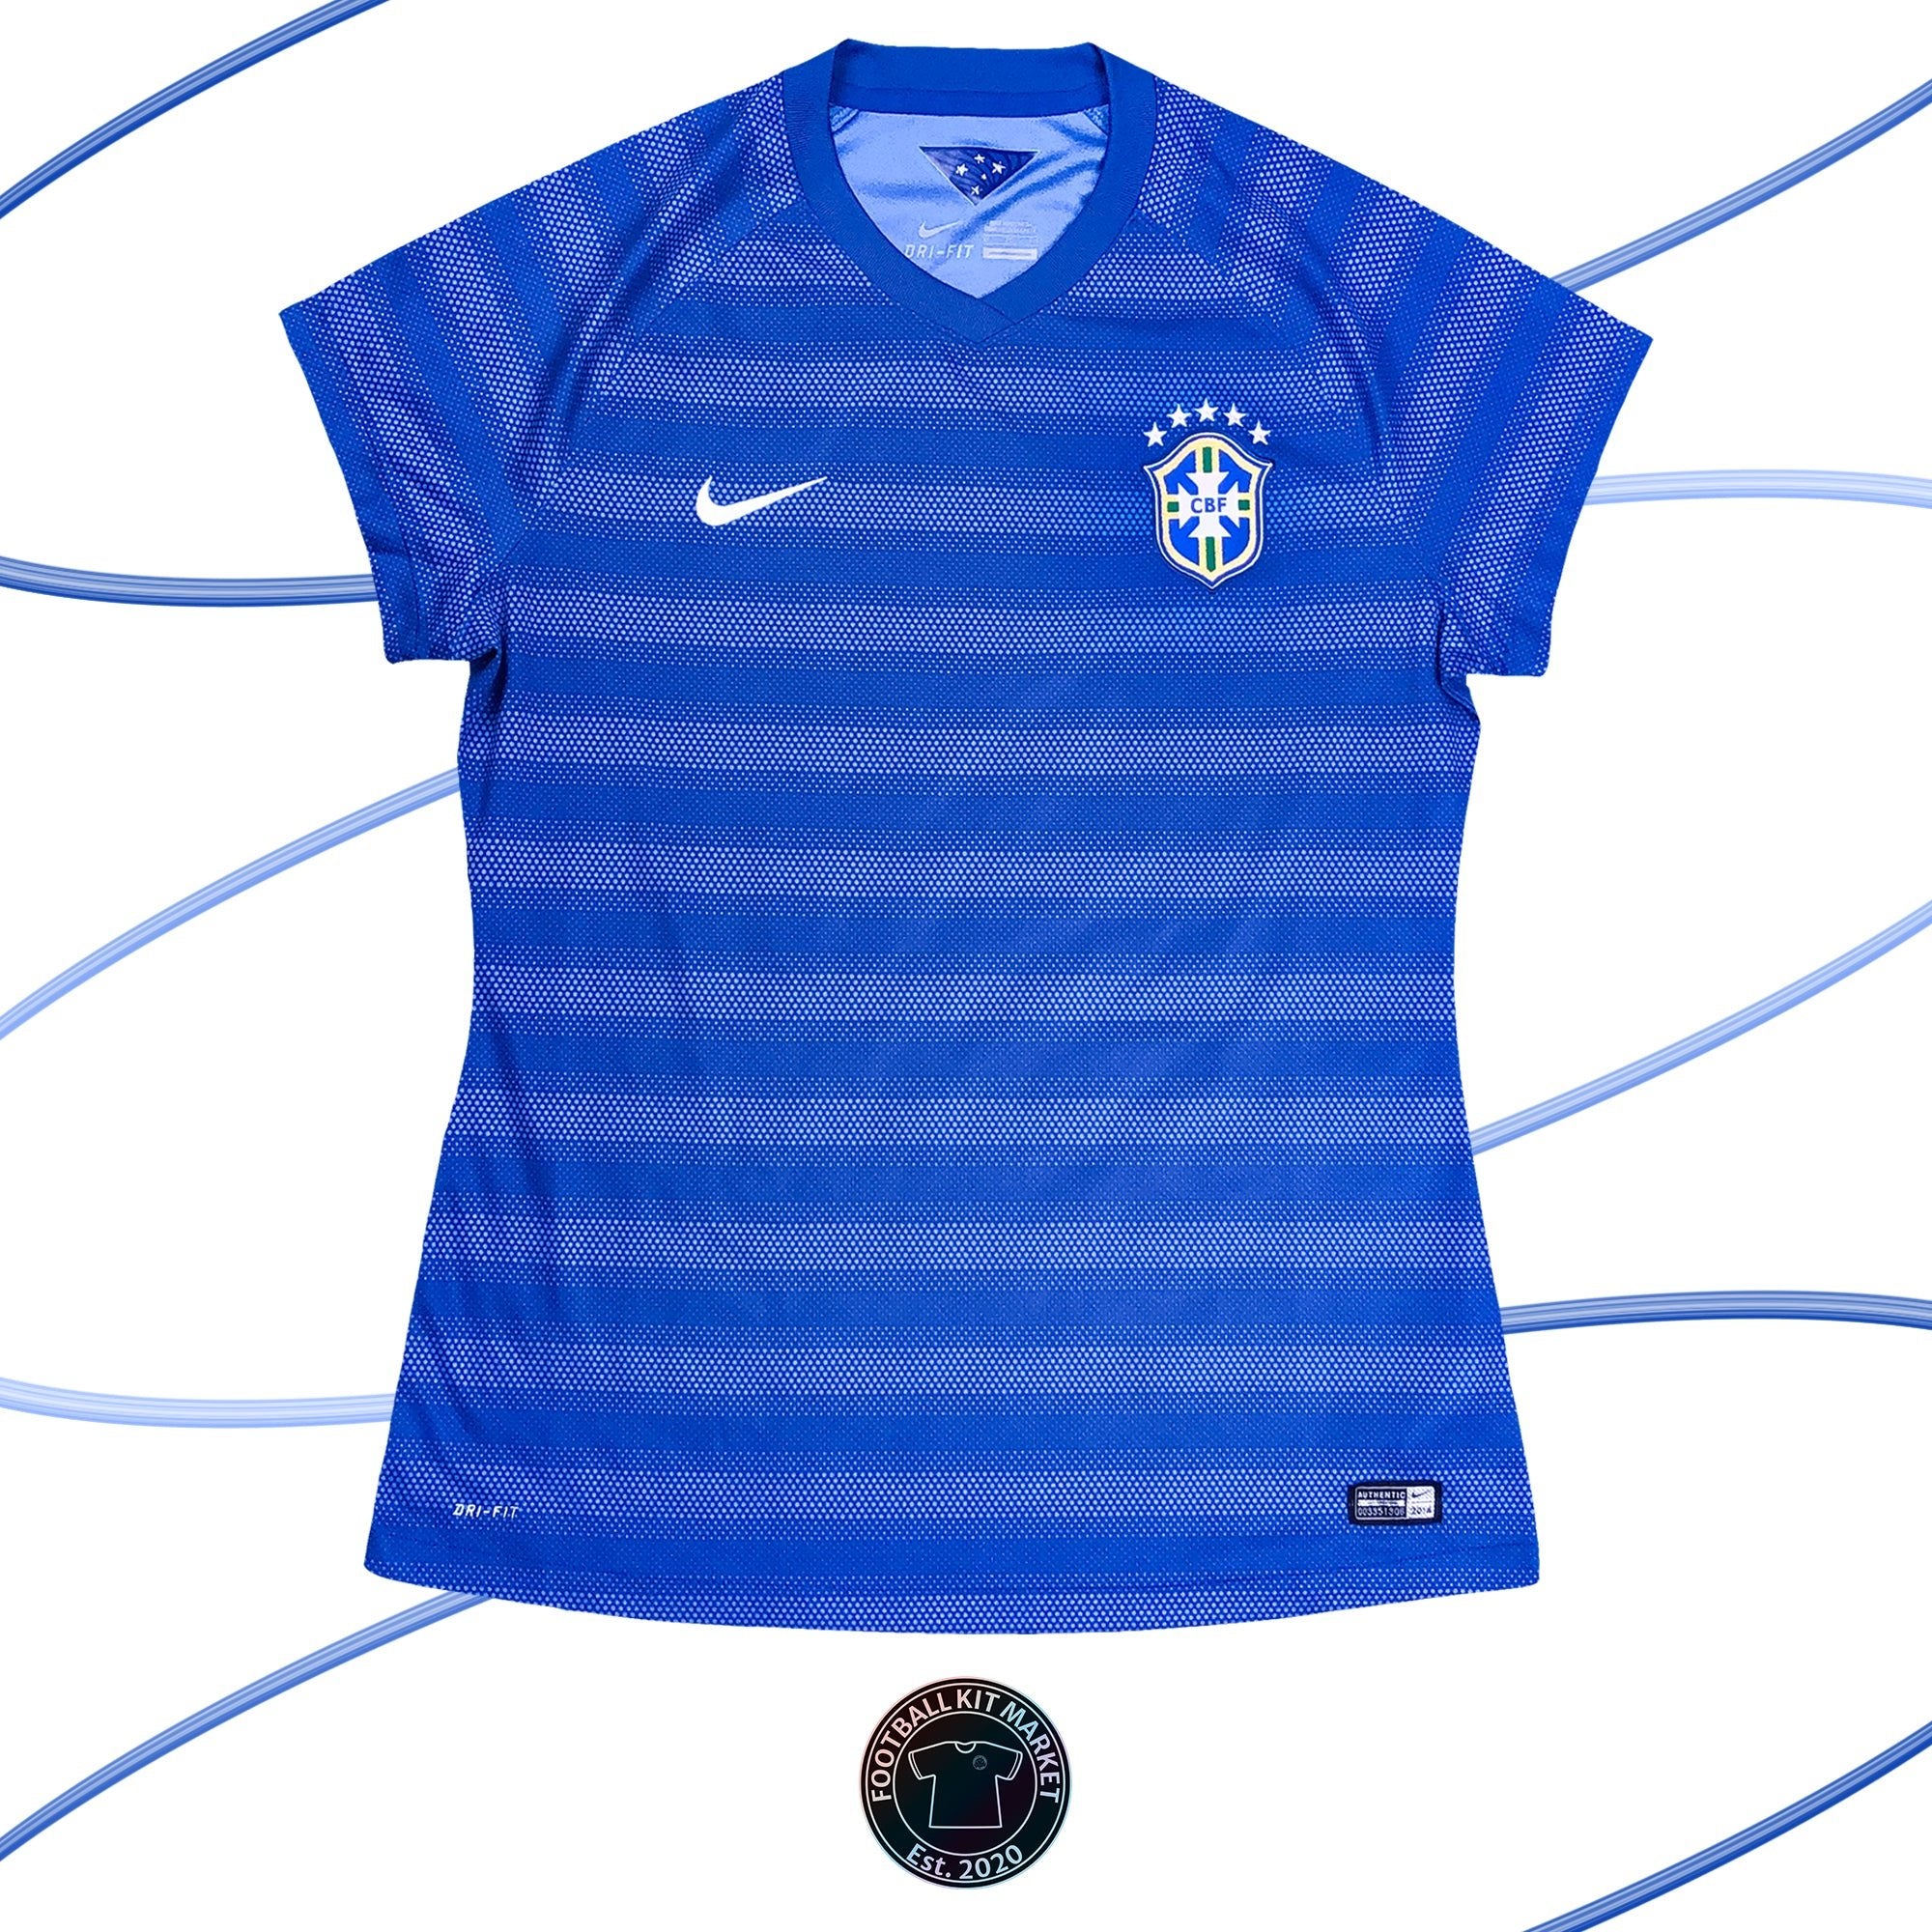 Genuine BRAZIL Away Shirt (2014-2015) - NIKE (Women's XL) - Product Image from Football Kit Market